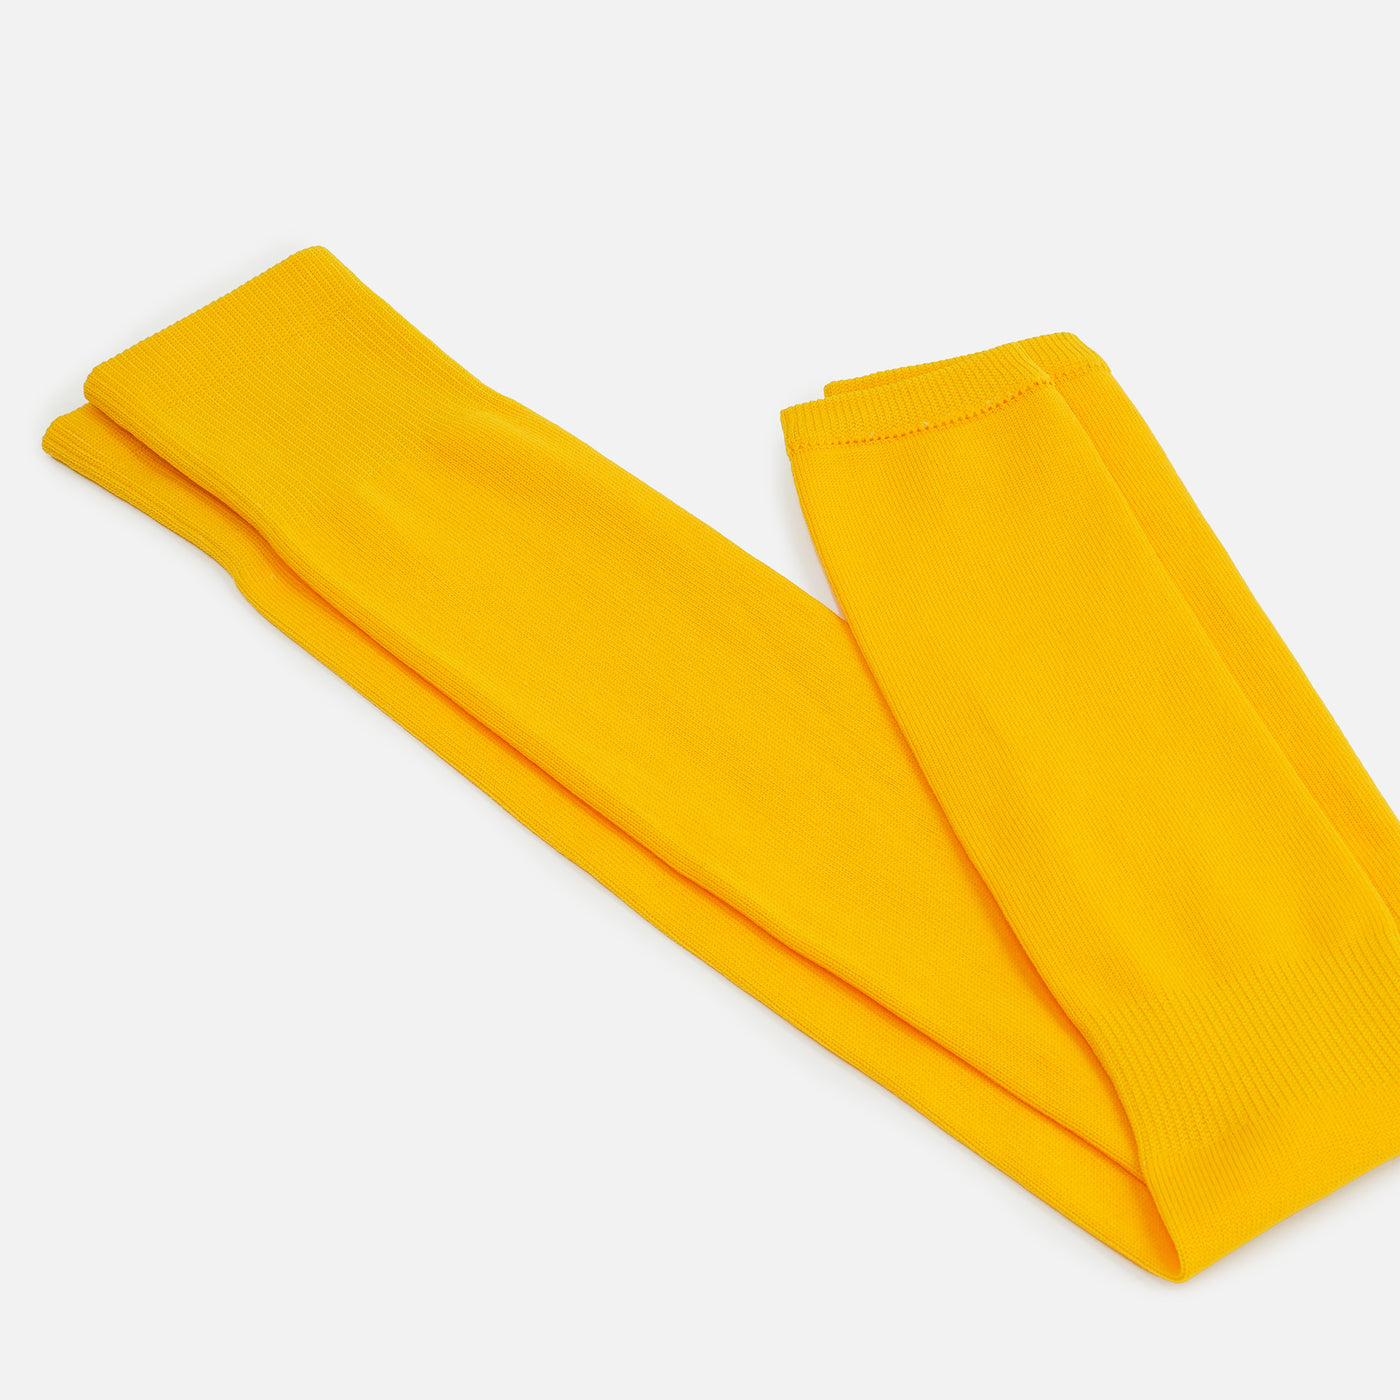 Hue Yellow Gold Long Soccer Leg Sleeves